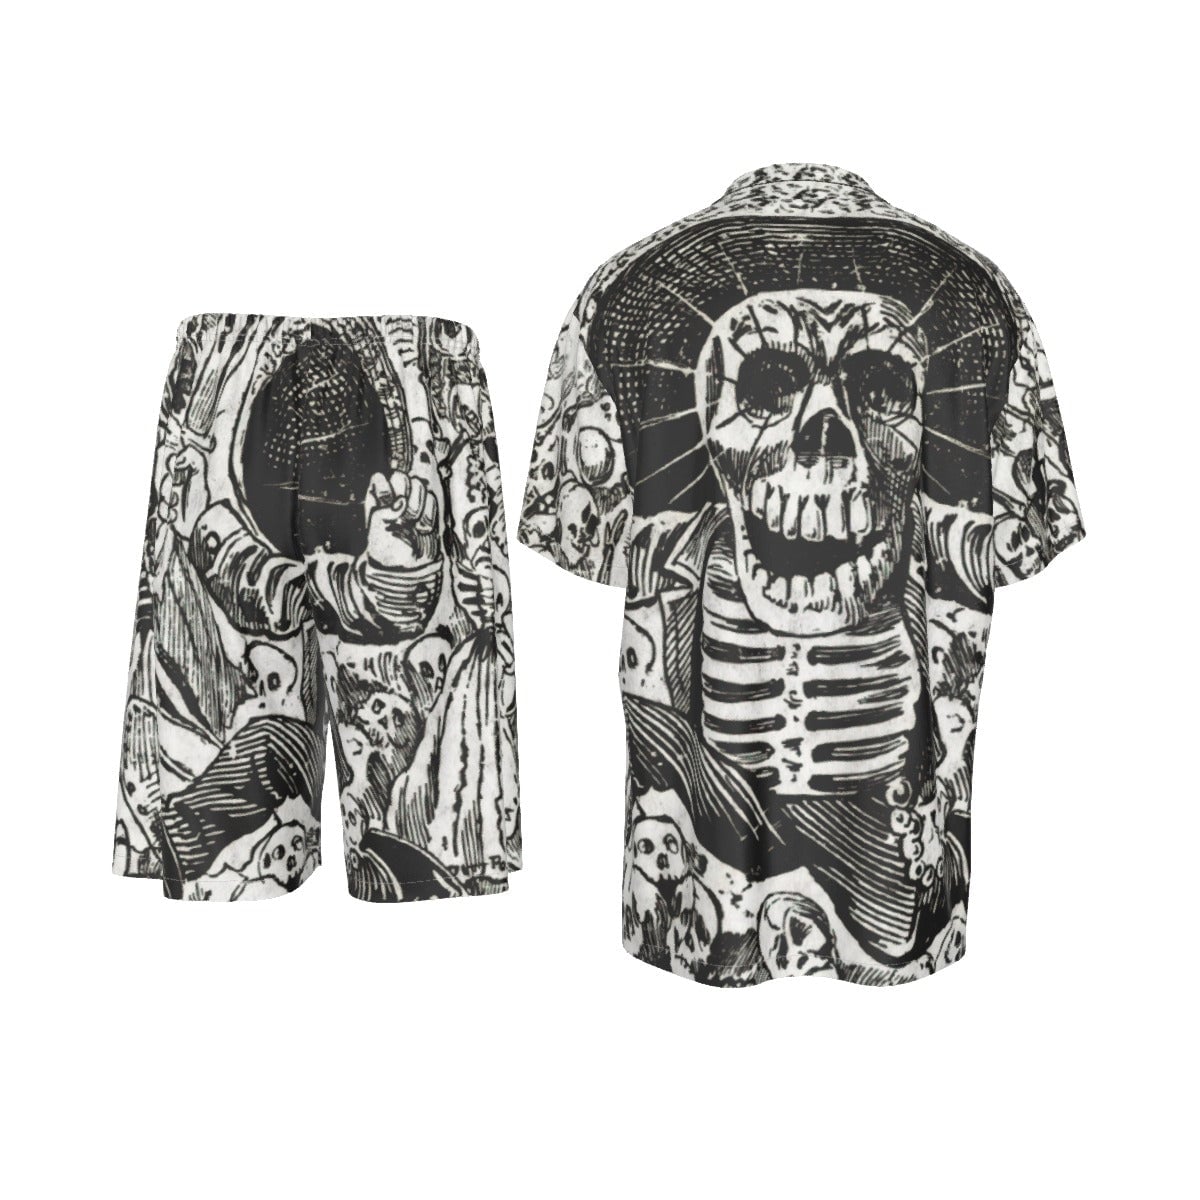 Jose Guadalupe Mexican Skeleton Art Шелковая рубашка Костюм Комплект